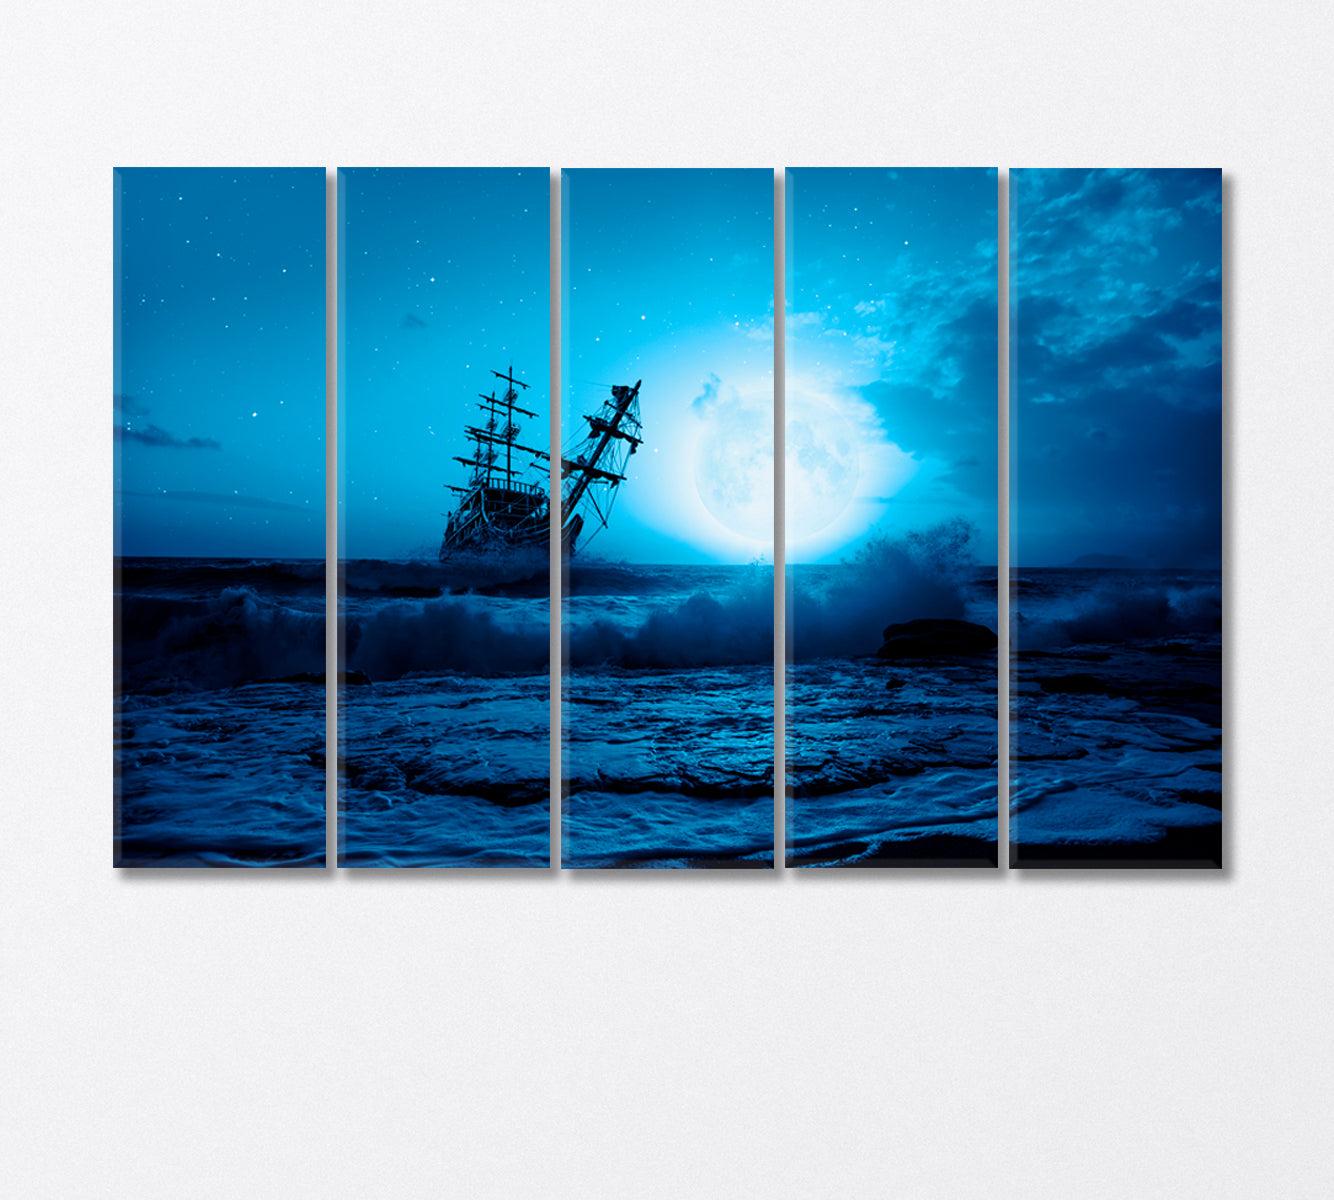 Sailing Old Ship in Stormy Sea at Night Canvas Print-Canvas Print-CetArt-5 Panels-36x24 inches-CetArt